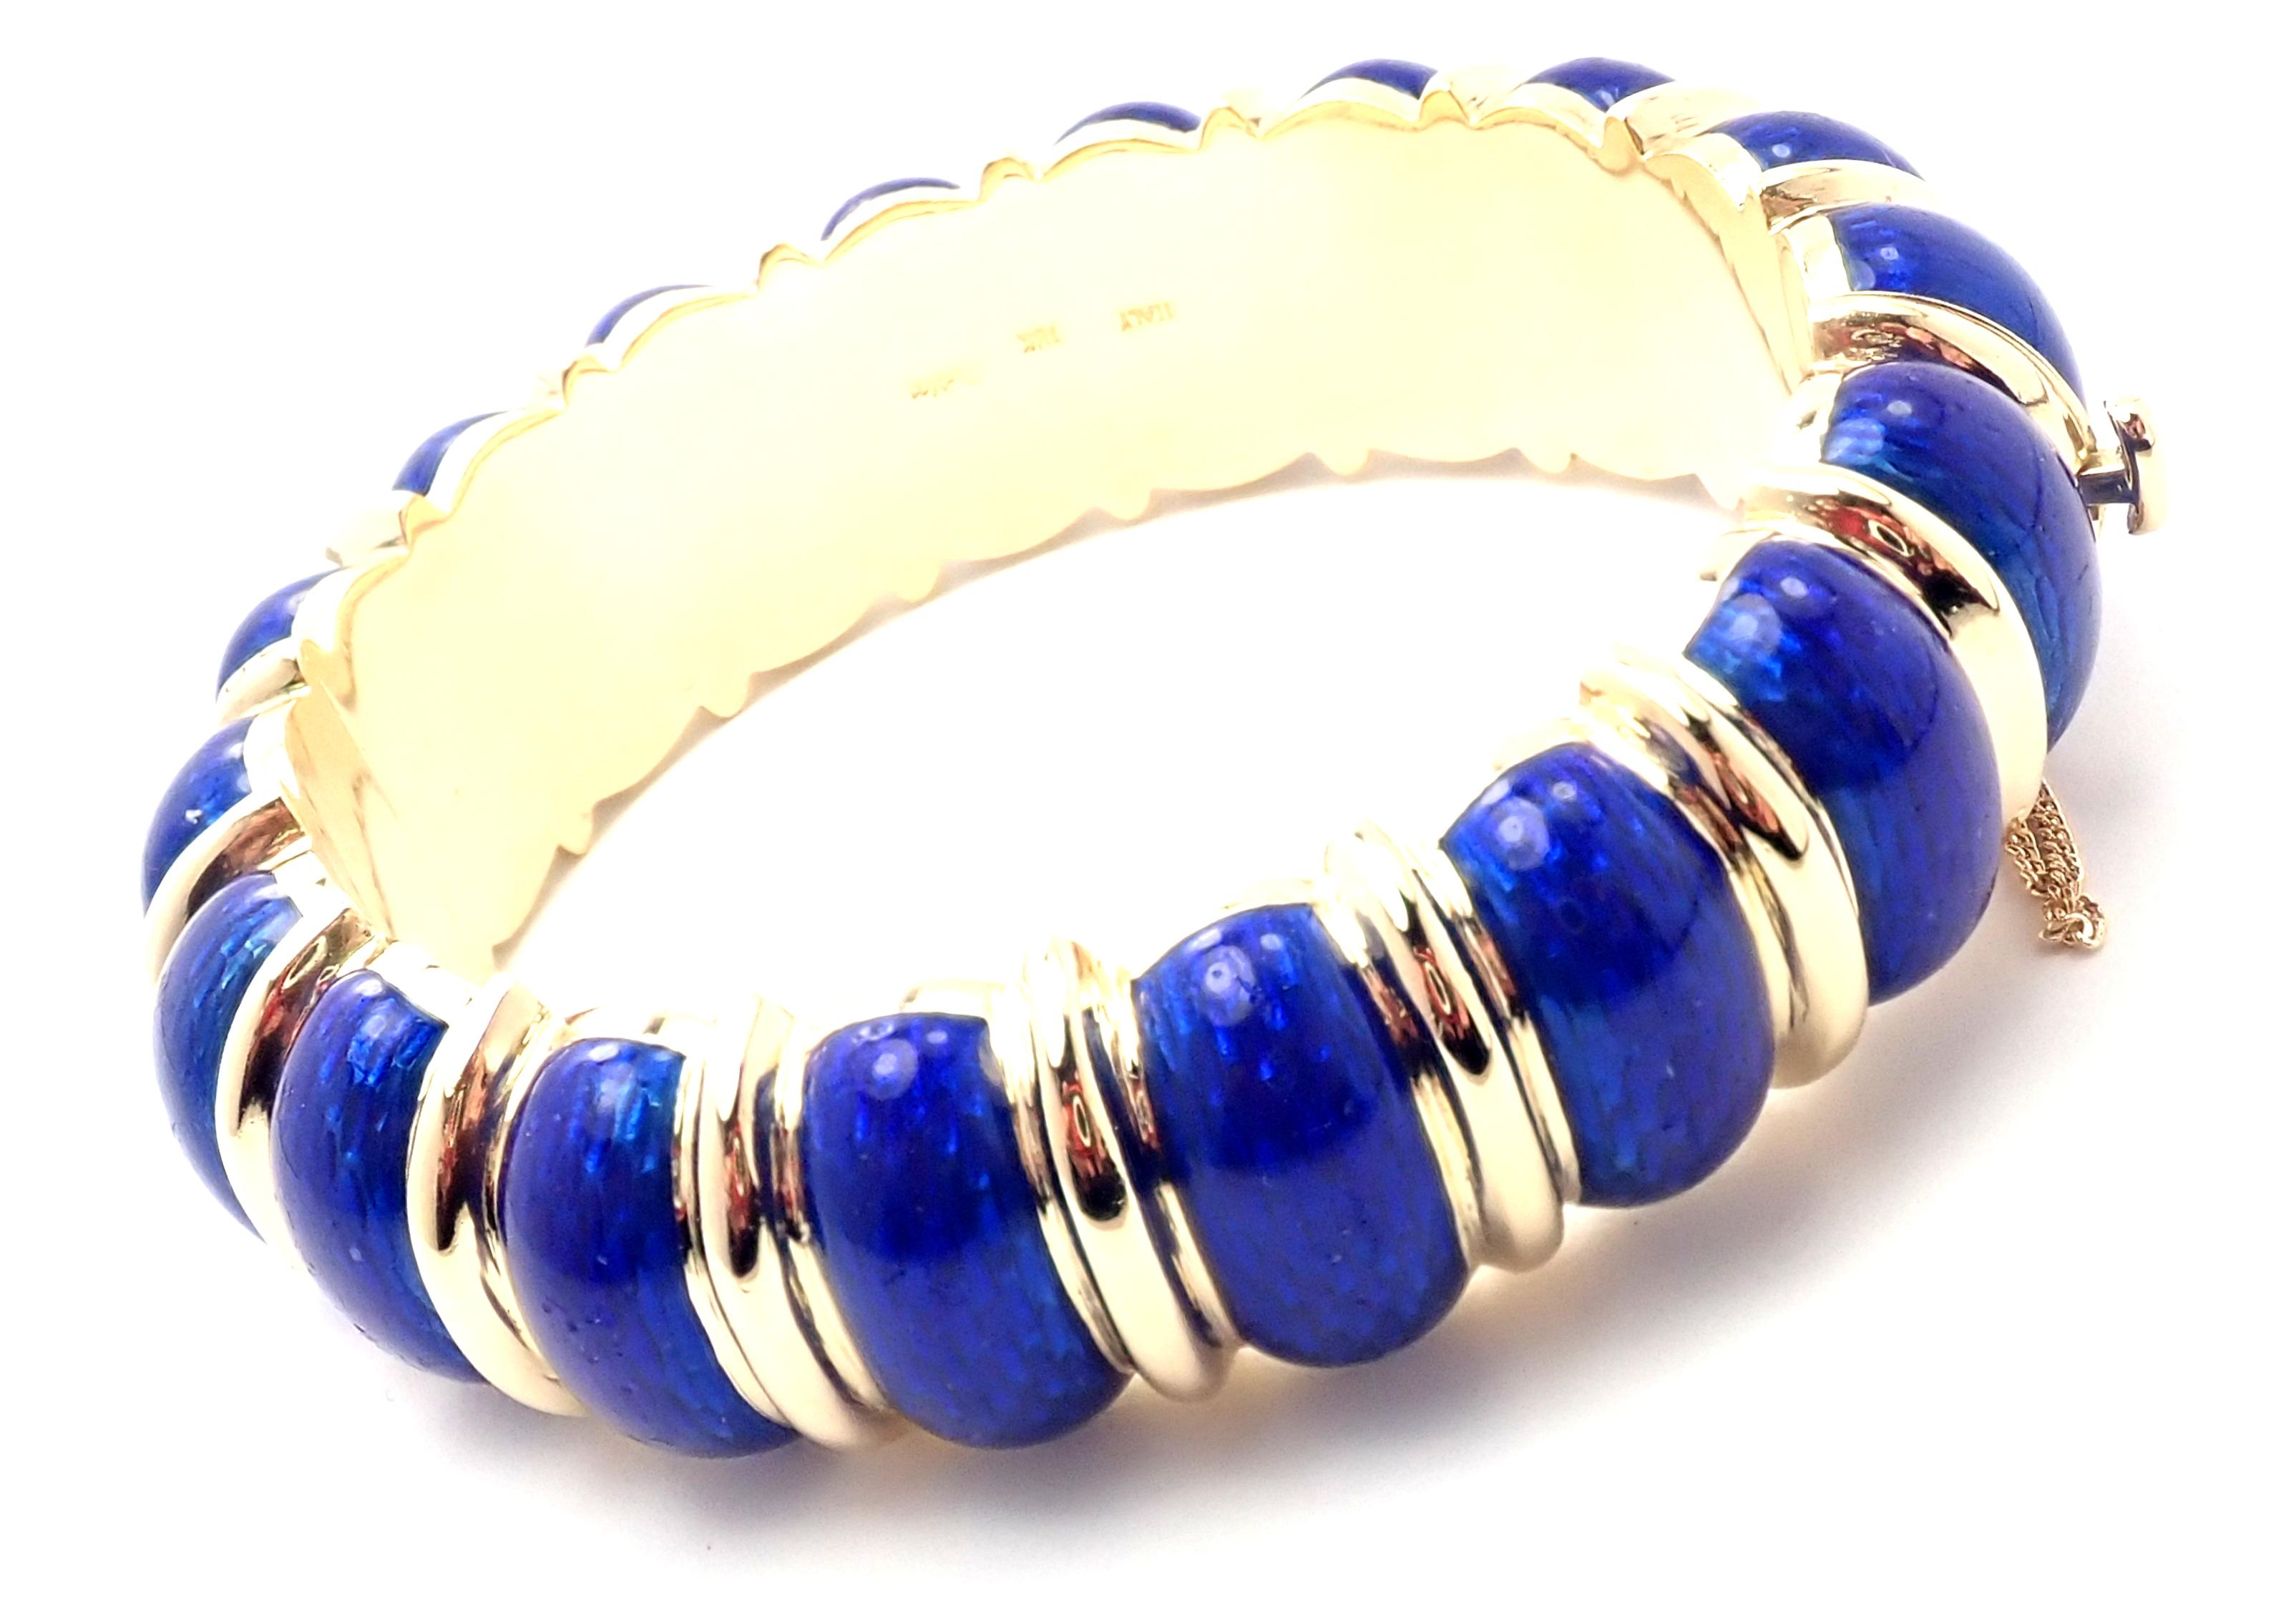 18k Yellow Gold Blue Enamel Wide Bangle Bracelet by Cartier. 
Details: 
Length: 7